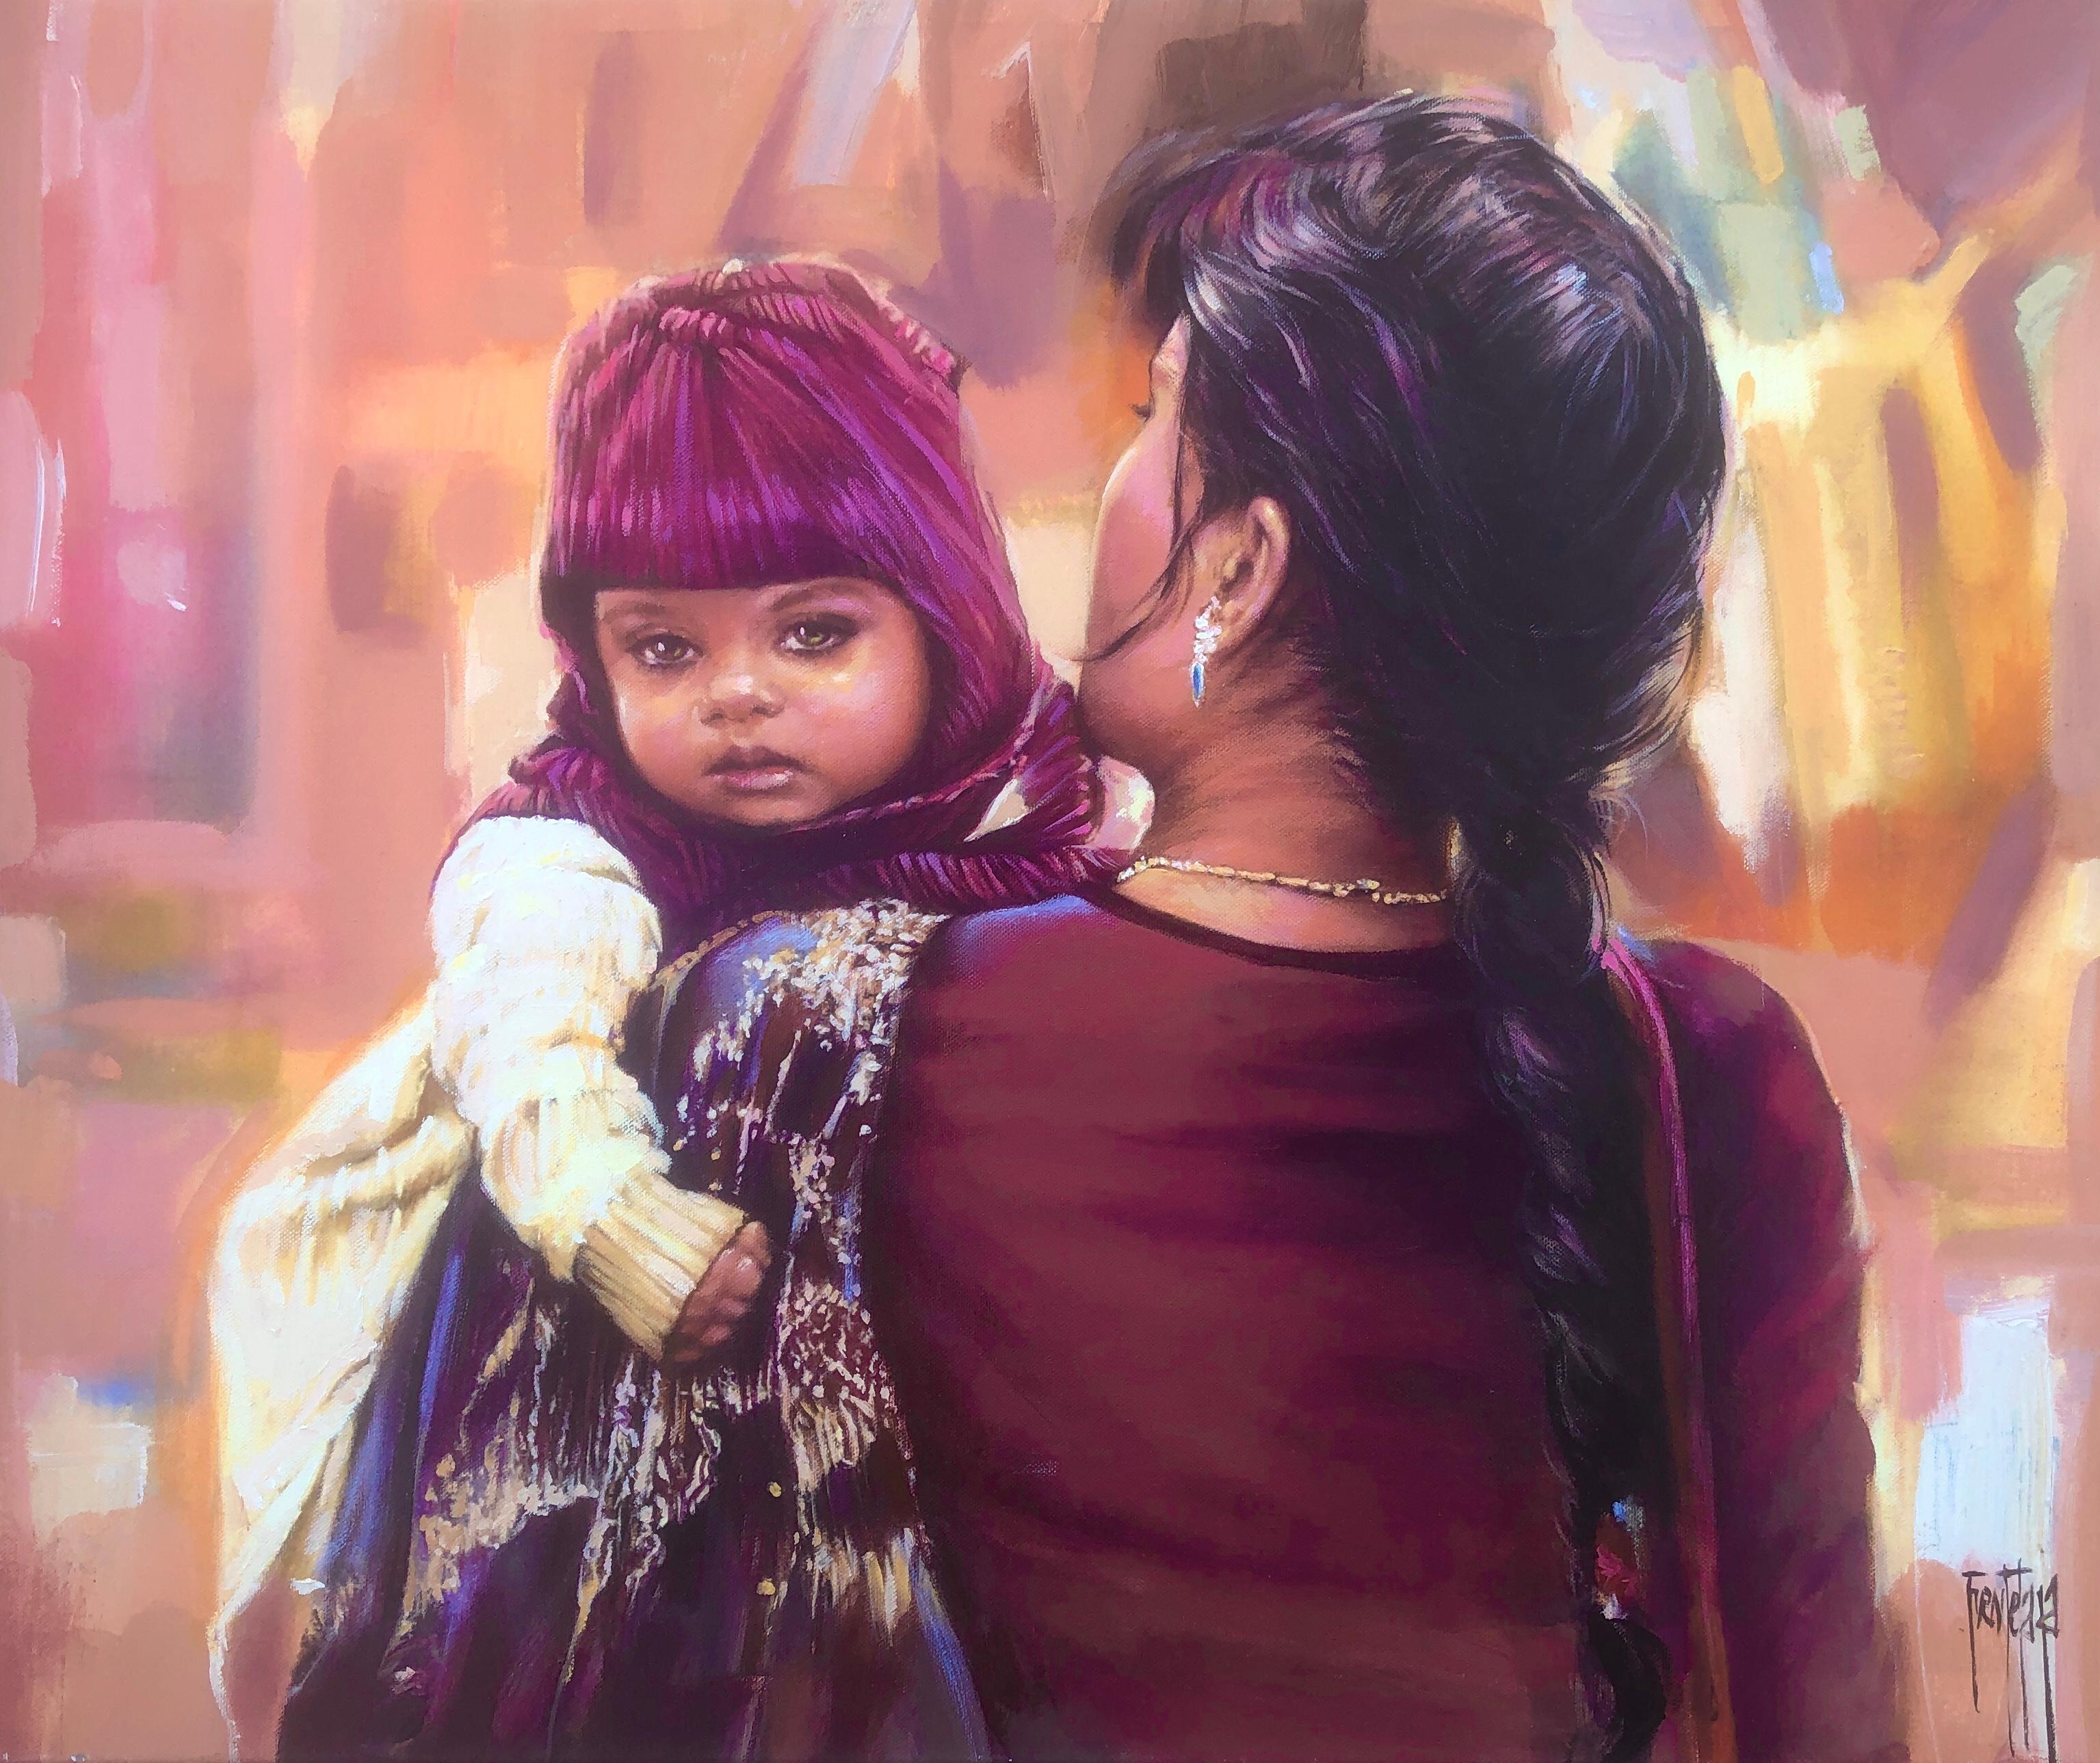 José Luis Fuentetaja Portrait Painting - Maternity mixed media on canvas Nepal